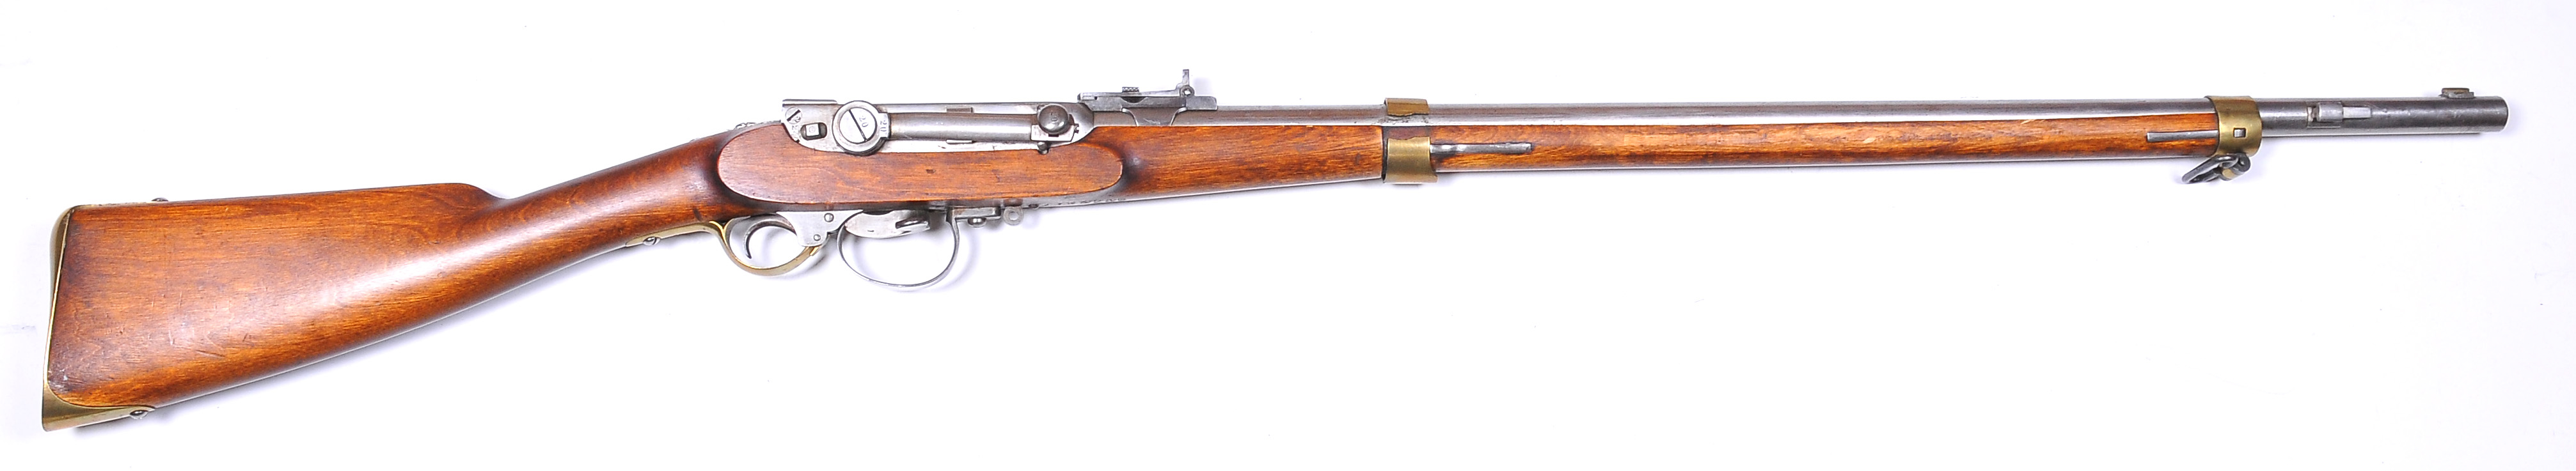 ./guns/rifle/bilder/Rifle-Kongsberg-Kammerlader-1859-2band-20A-1.jpg